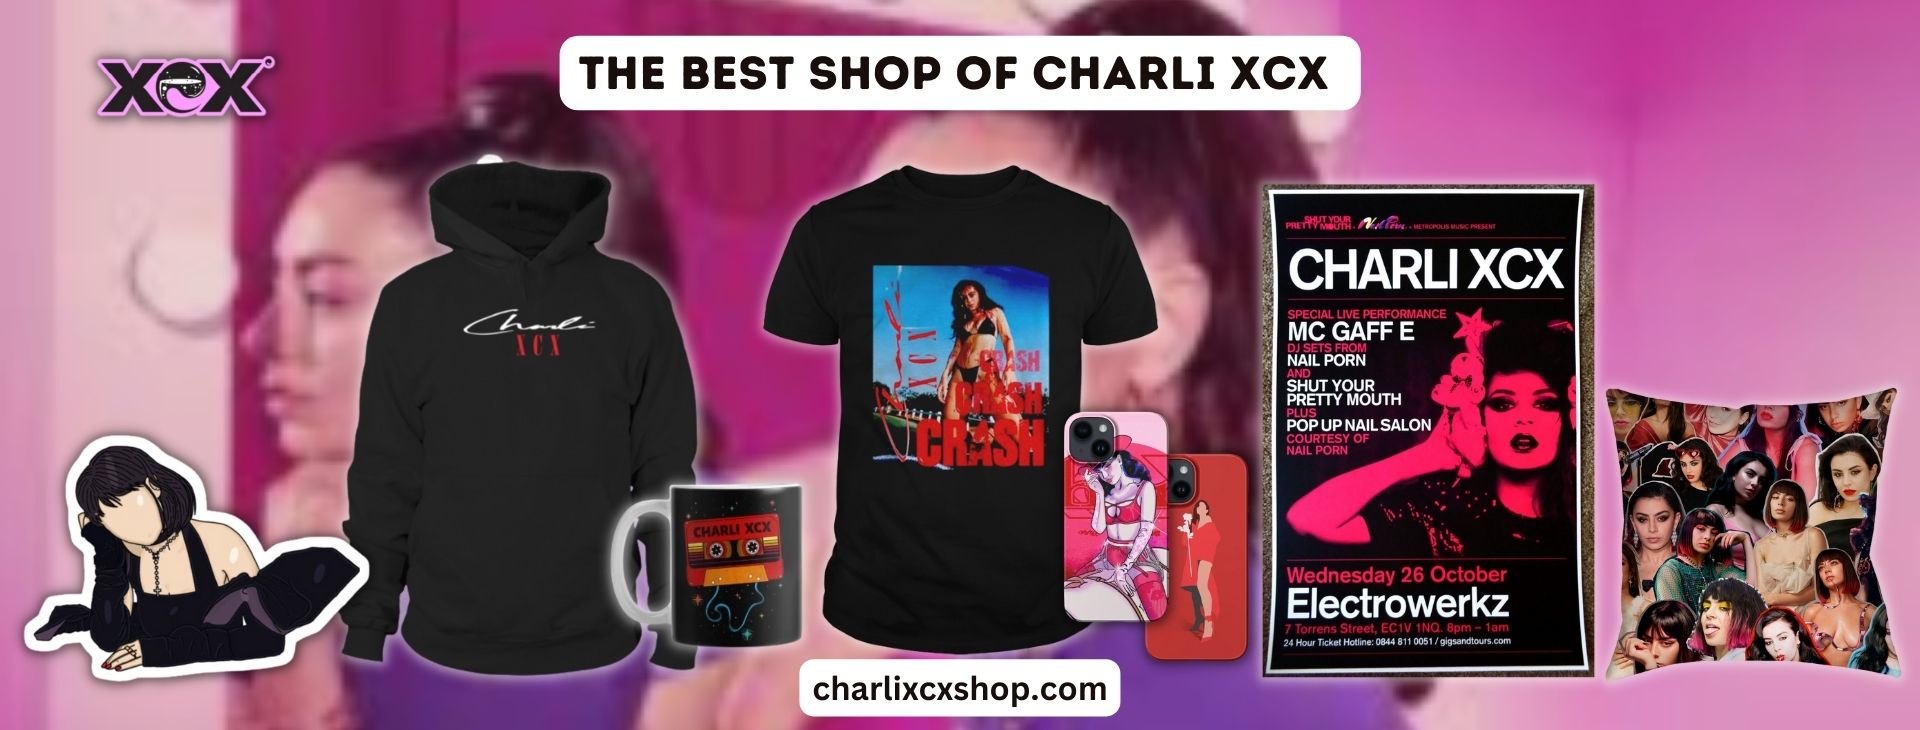 charli xcx Banner - Charli XCX Shop